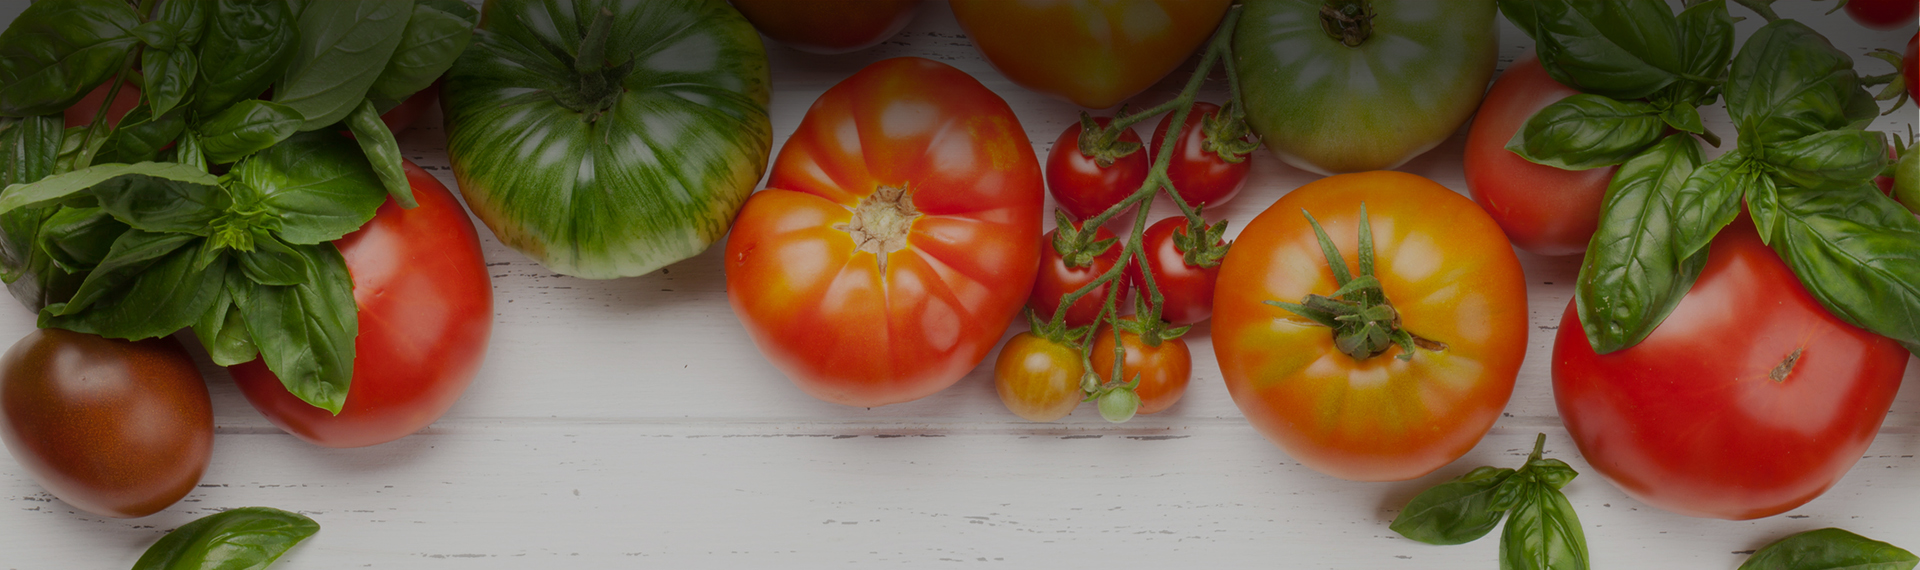 Slajd #1 - Pomidory